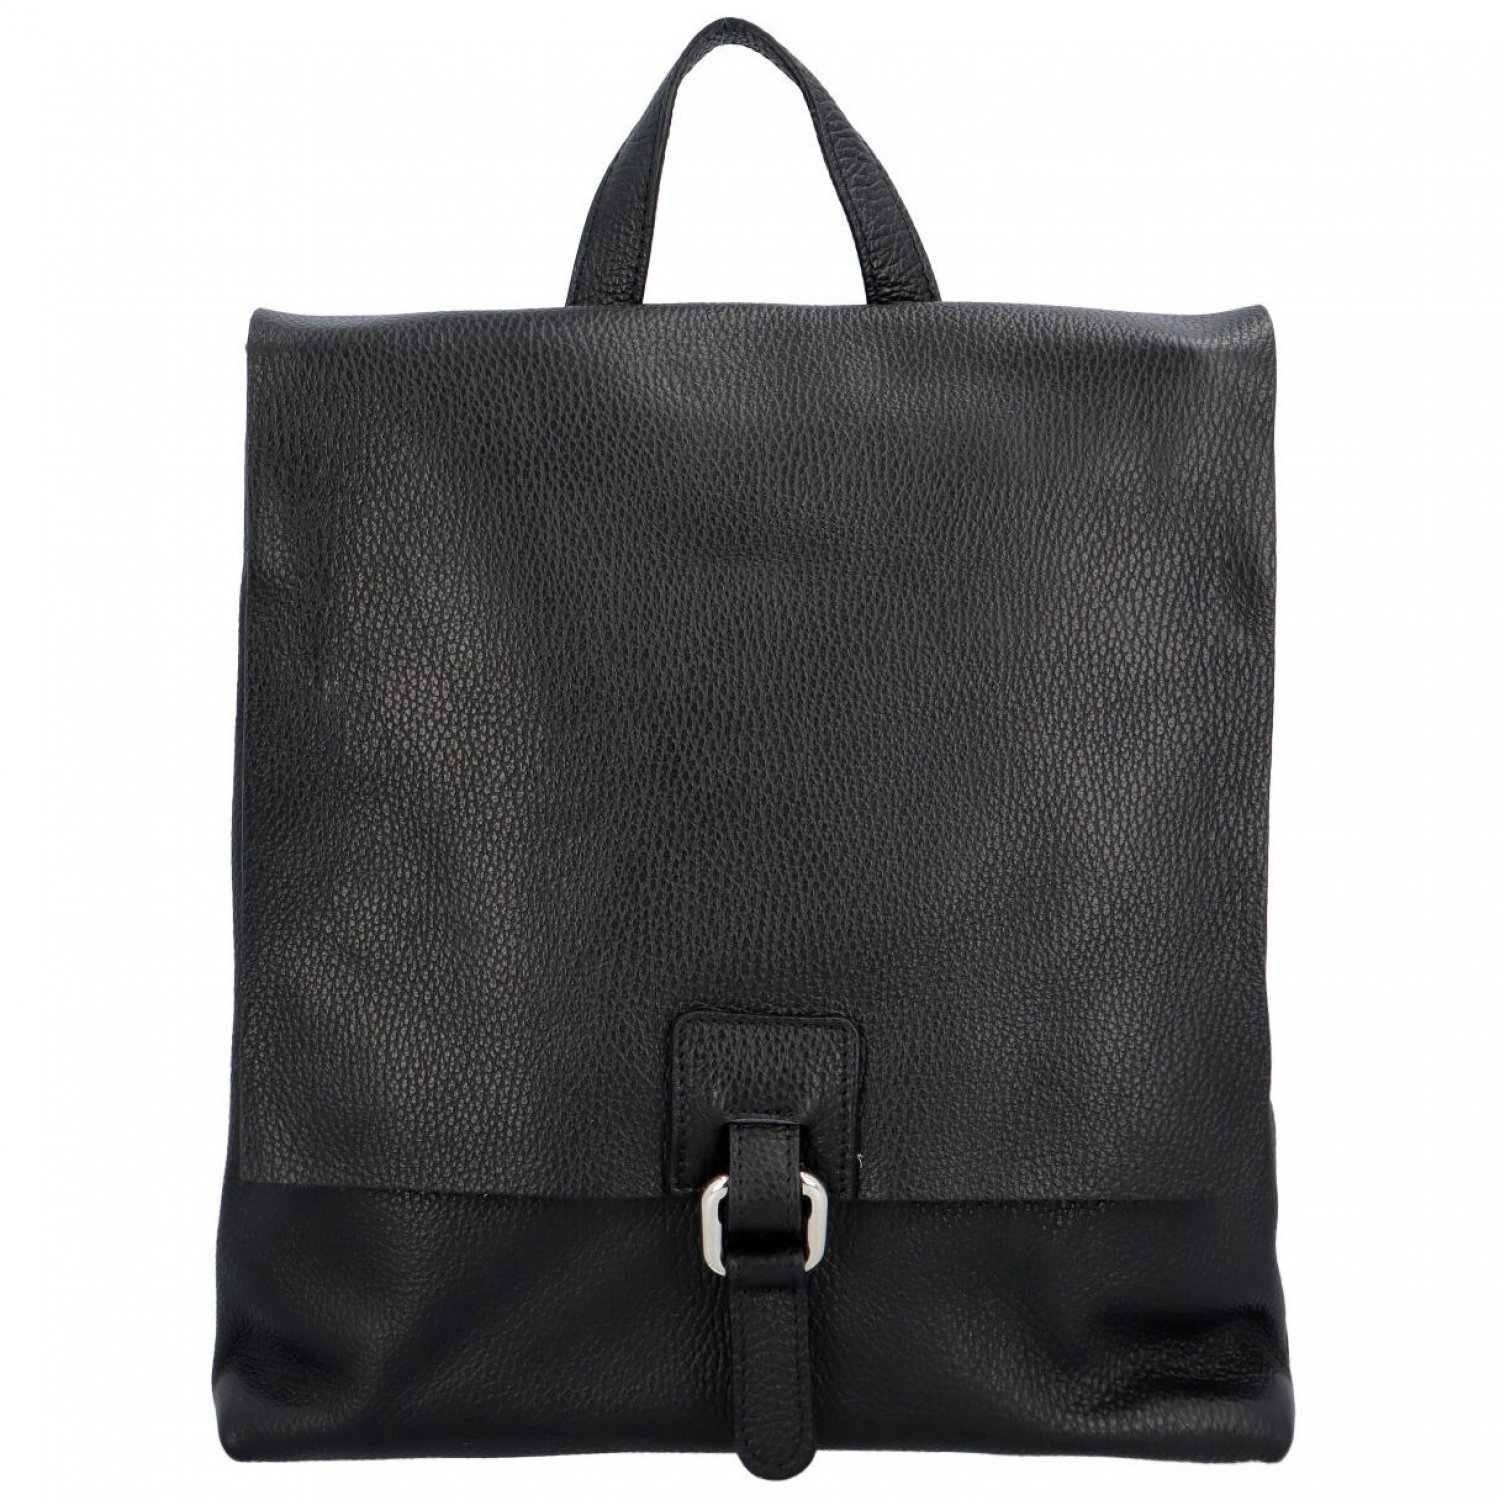 Dámský kožený batůžek kabelka černý - ItalY Francesco